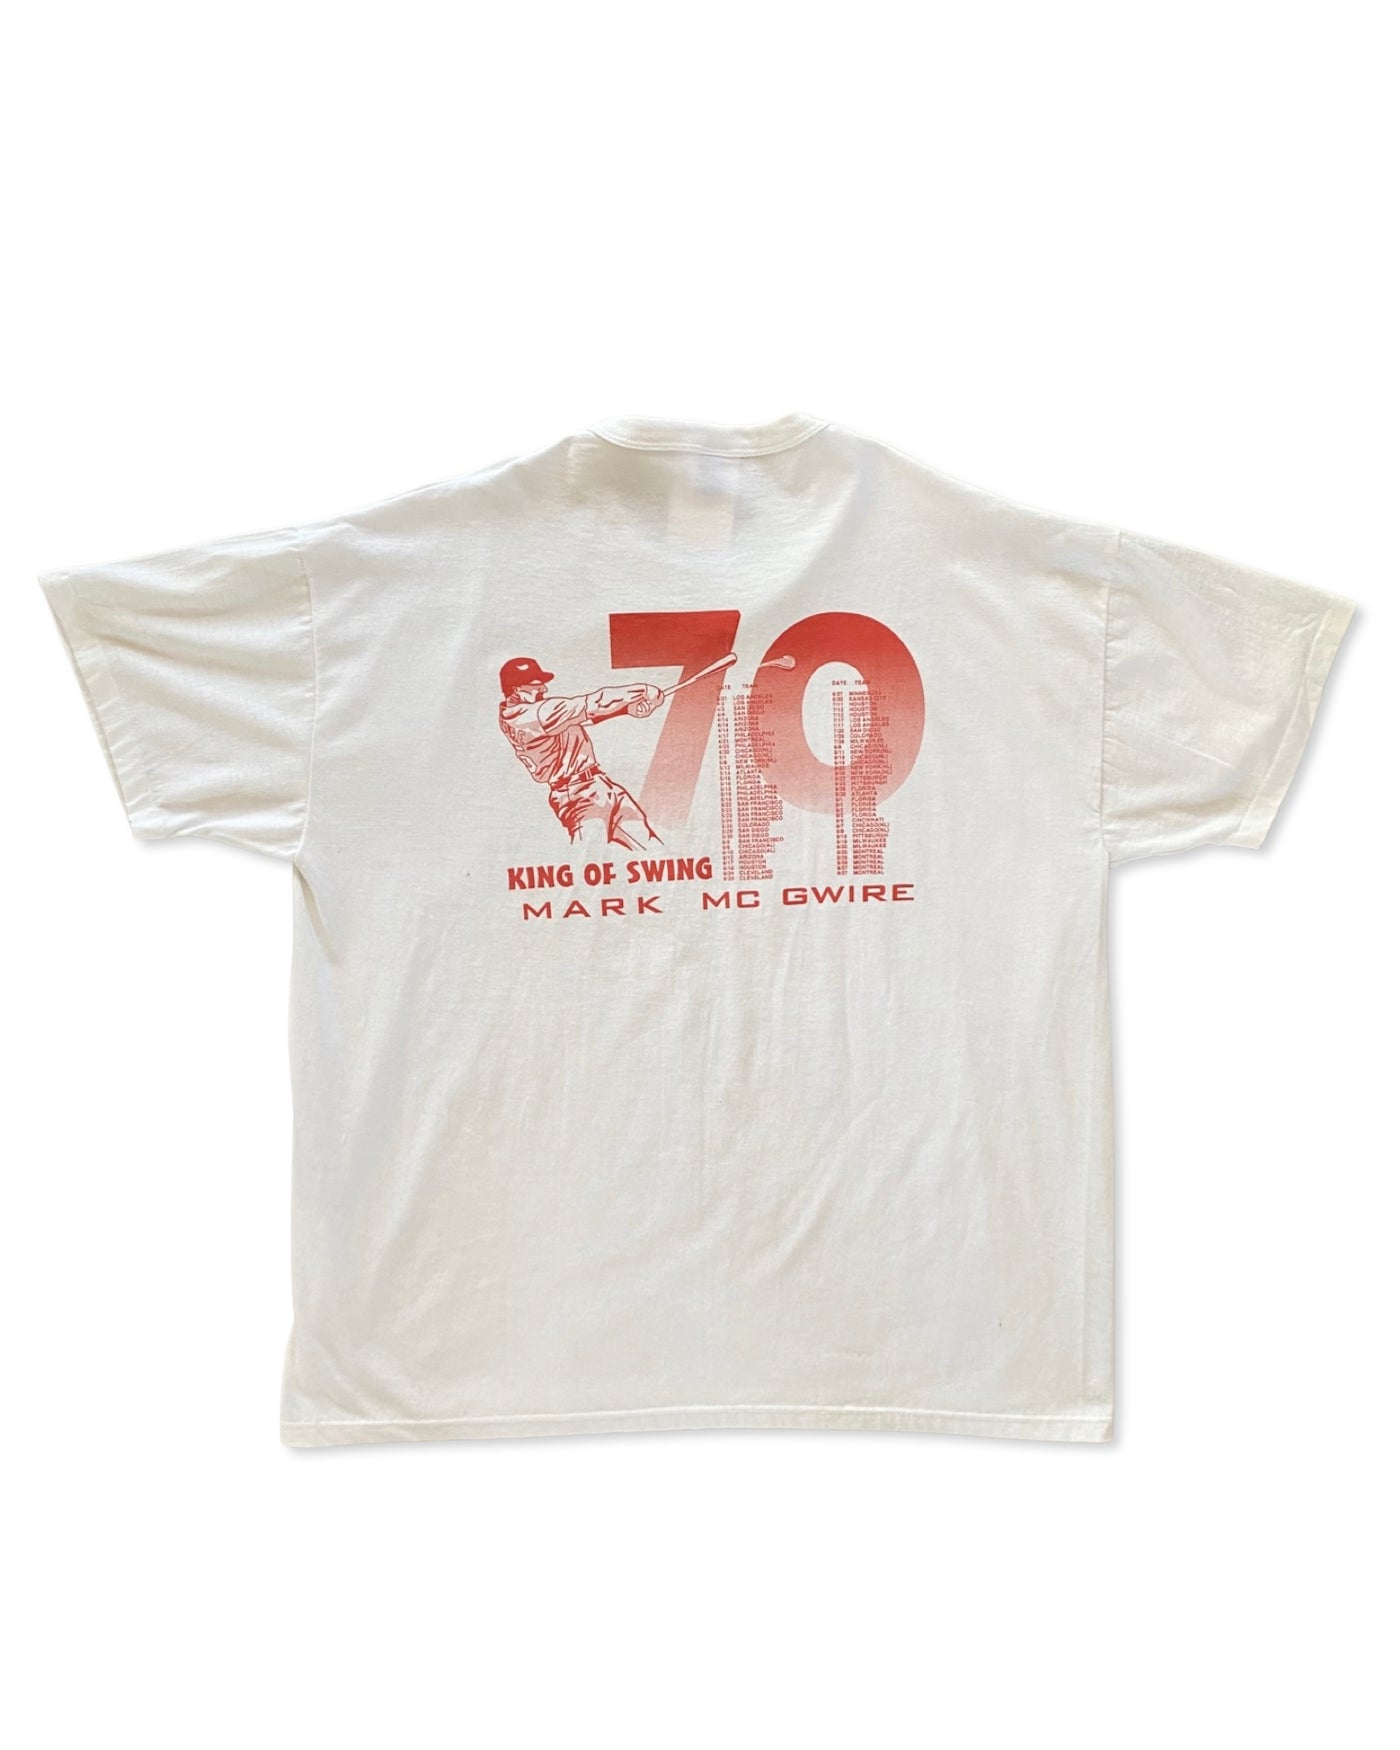 Vintage 1998 Big Mac Mark McGwire T-Shirt